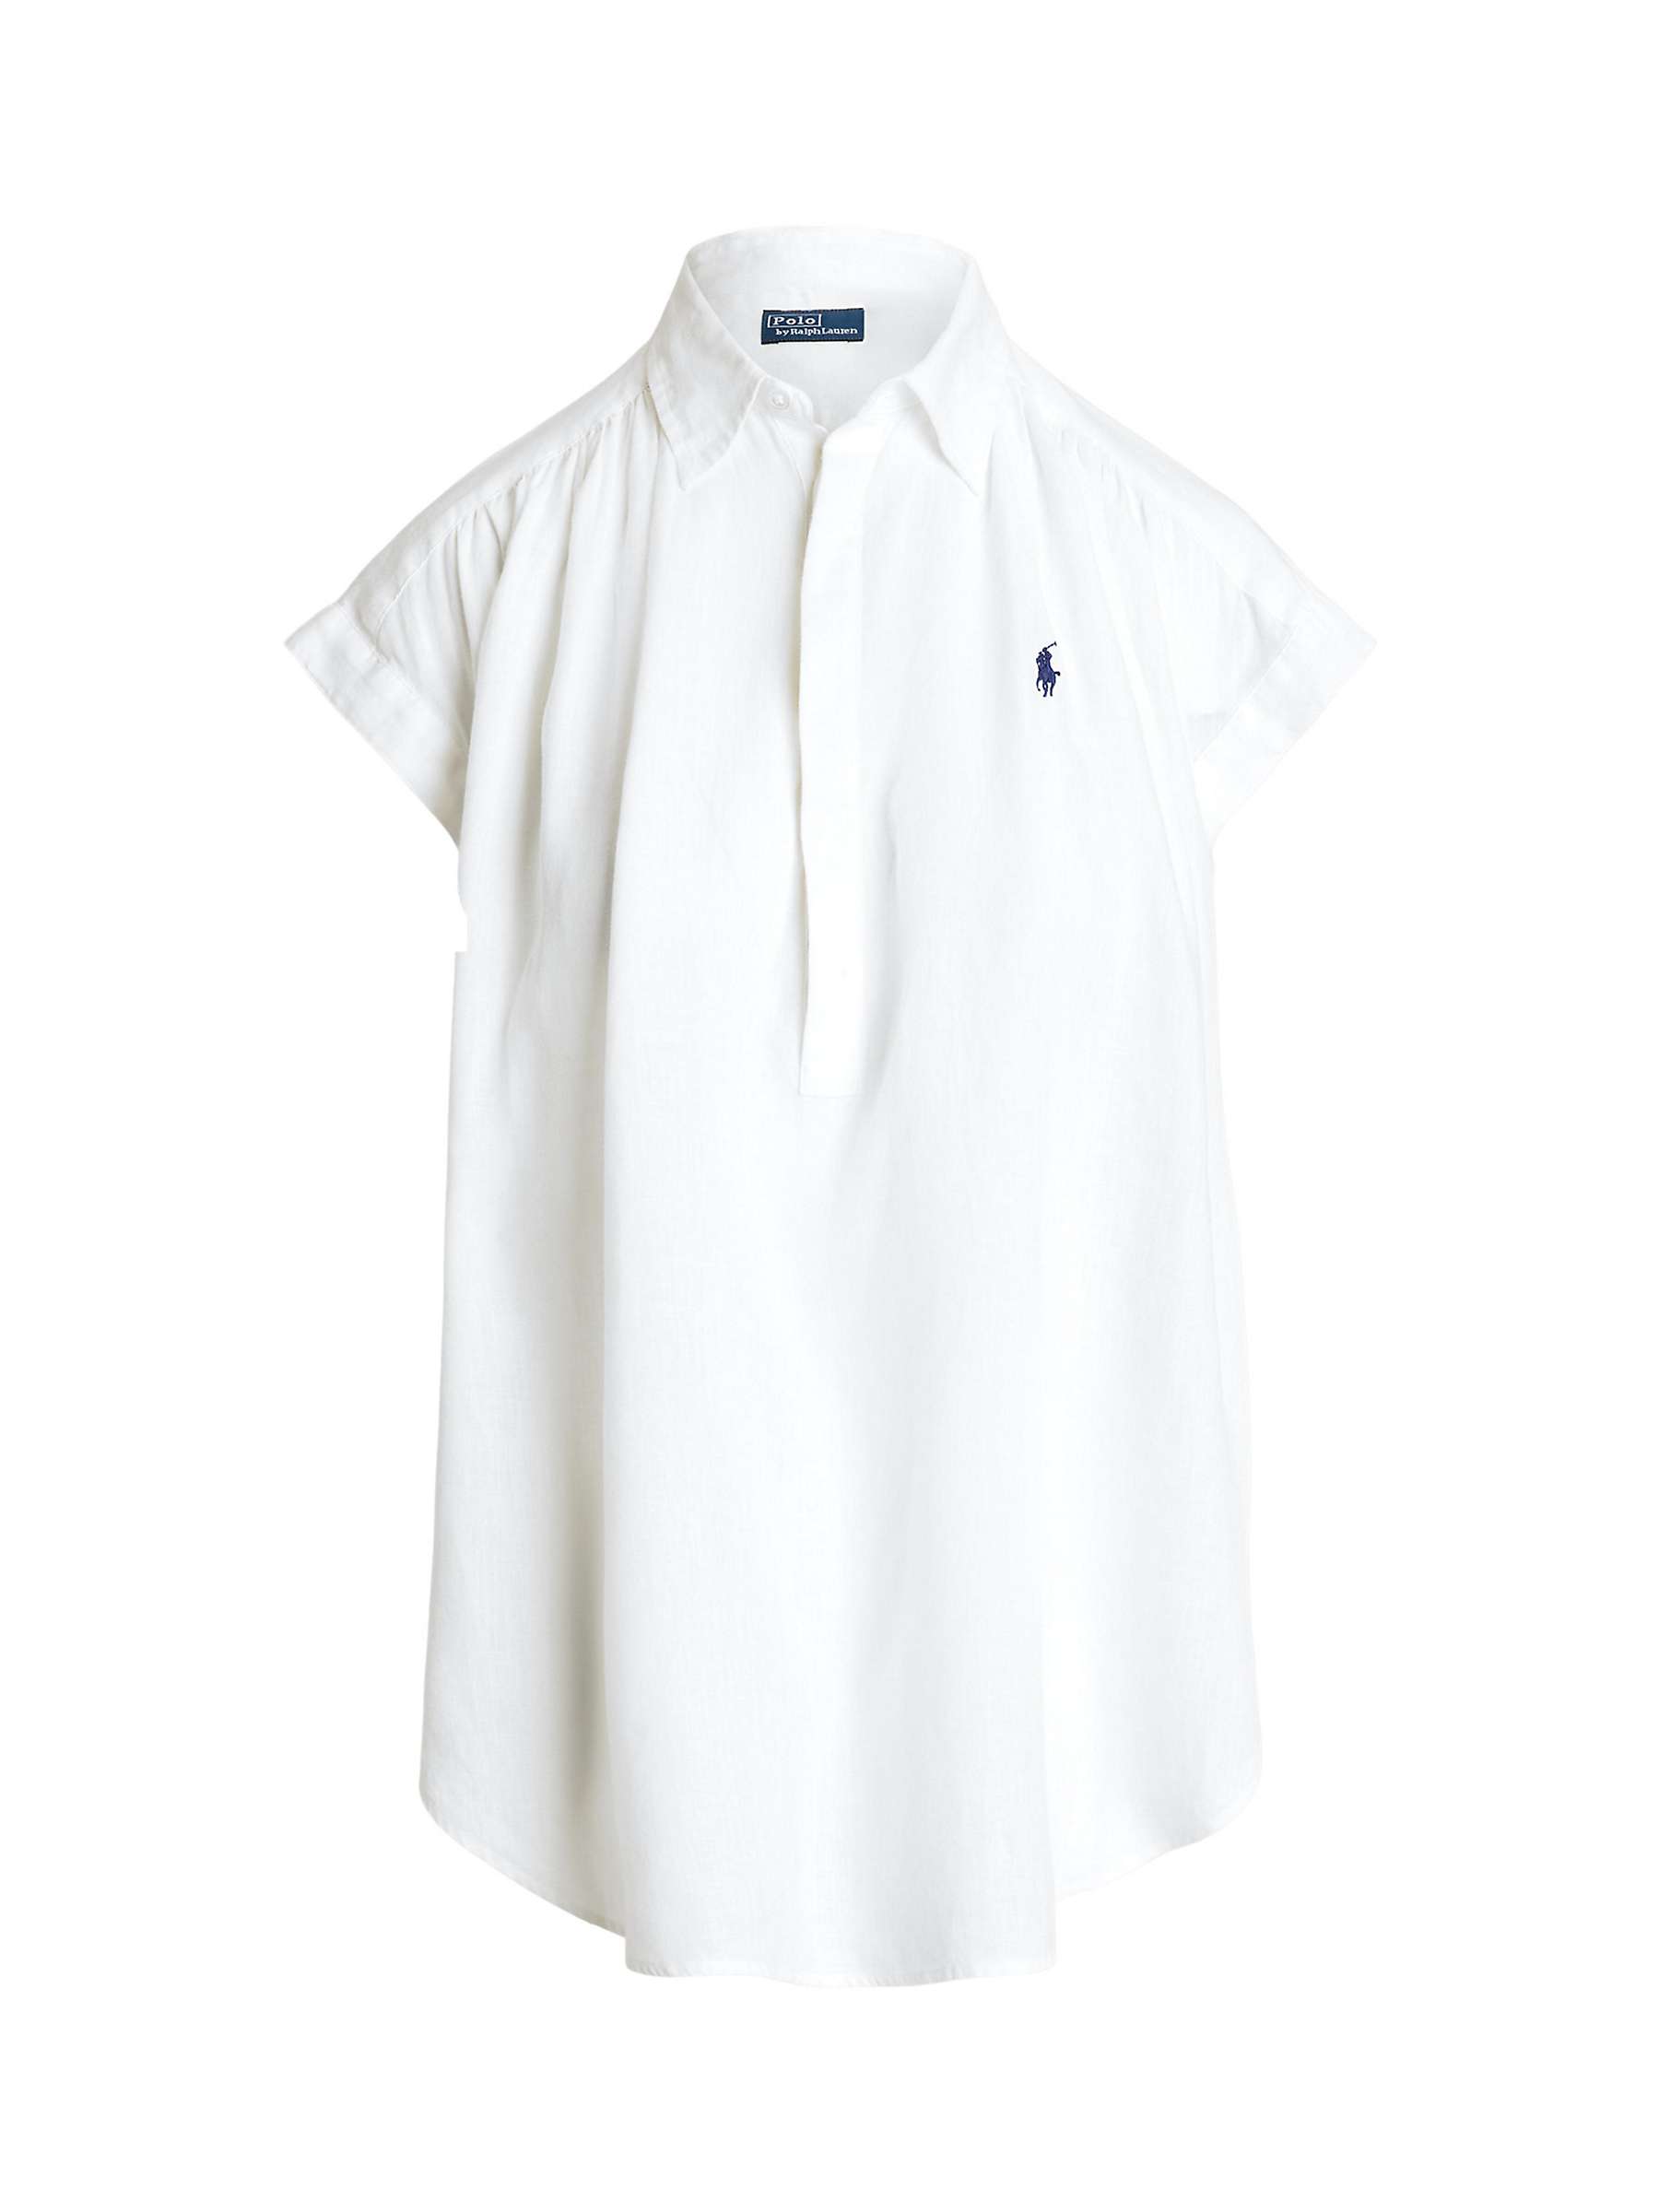 Buy Polo Ralph Lauren Linen Popover Shirt Online at johnlewis.com